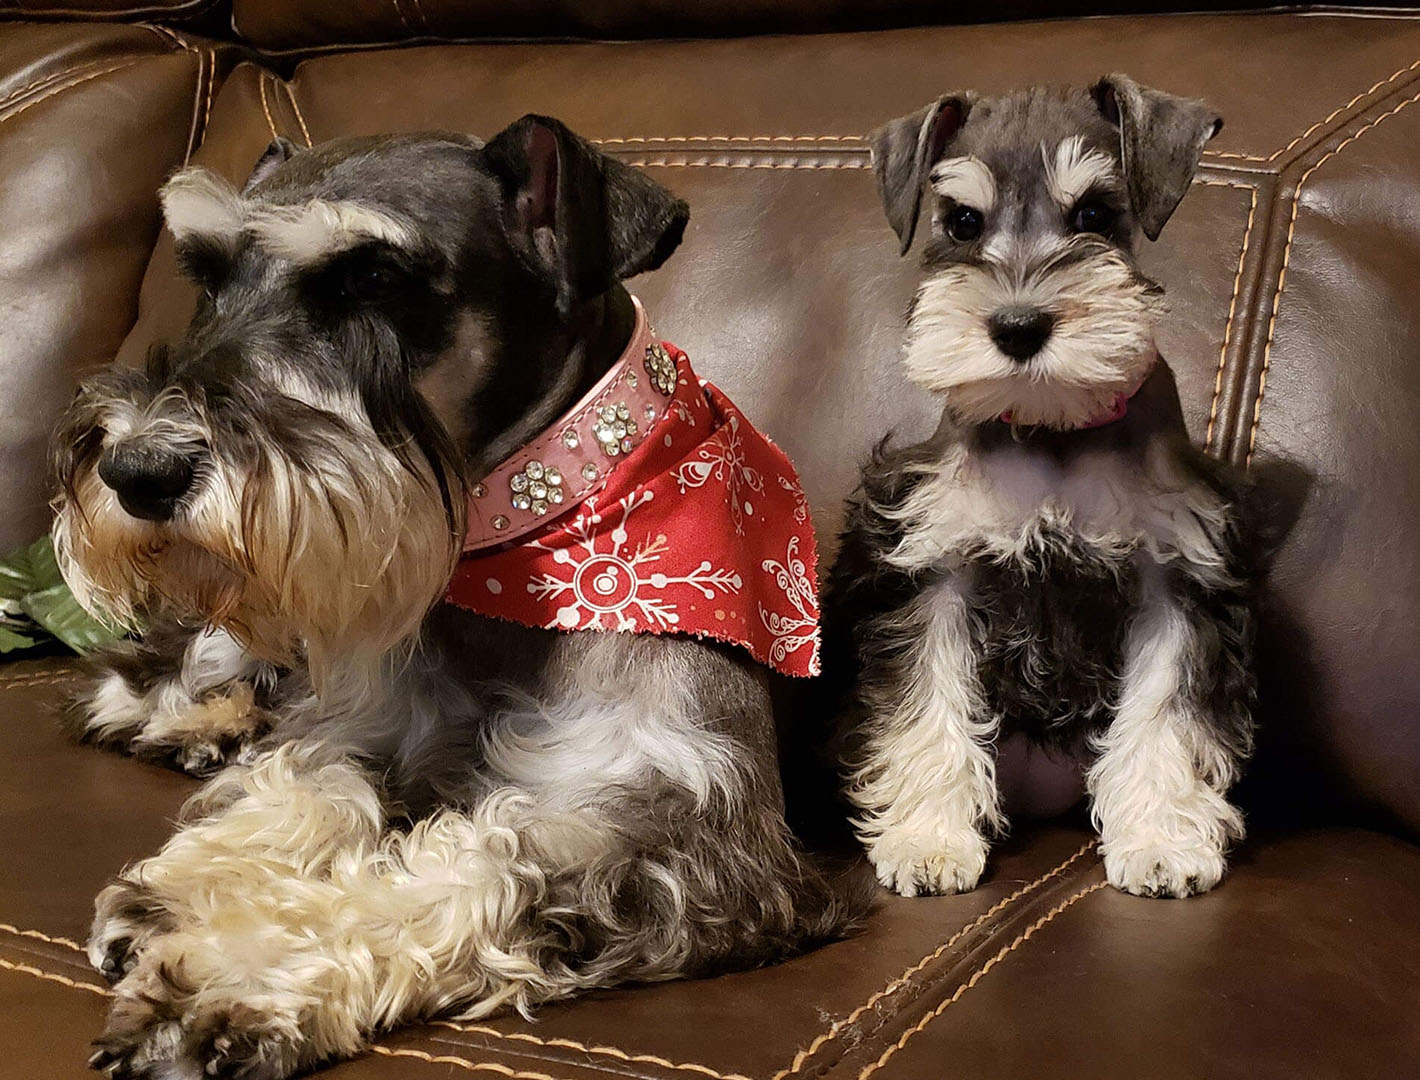 Tulsa Miniature Schnauzer Dog Breeder, Miniature Schnauzer Puppies for Sale and Miniature Schnauzer Dogs for Sale